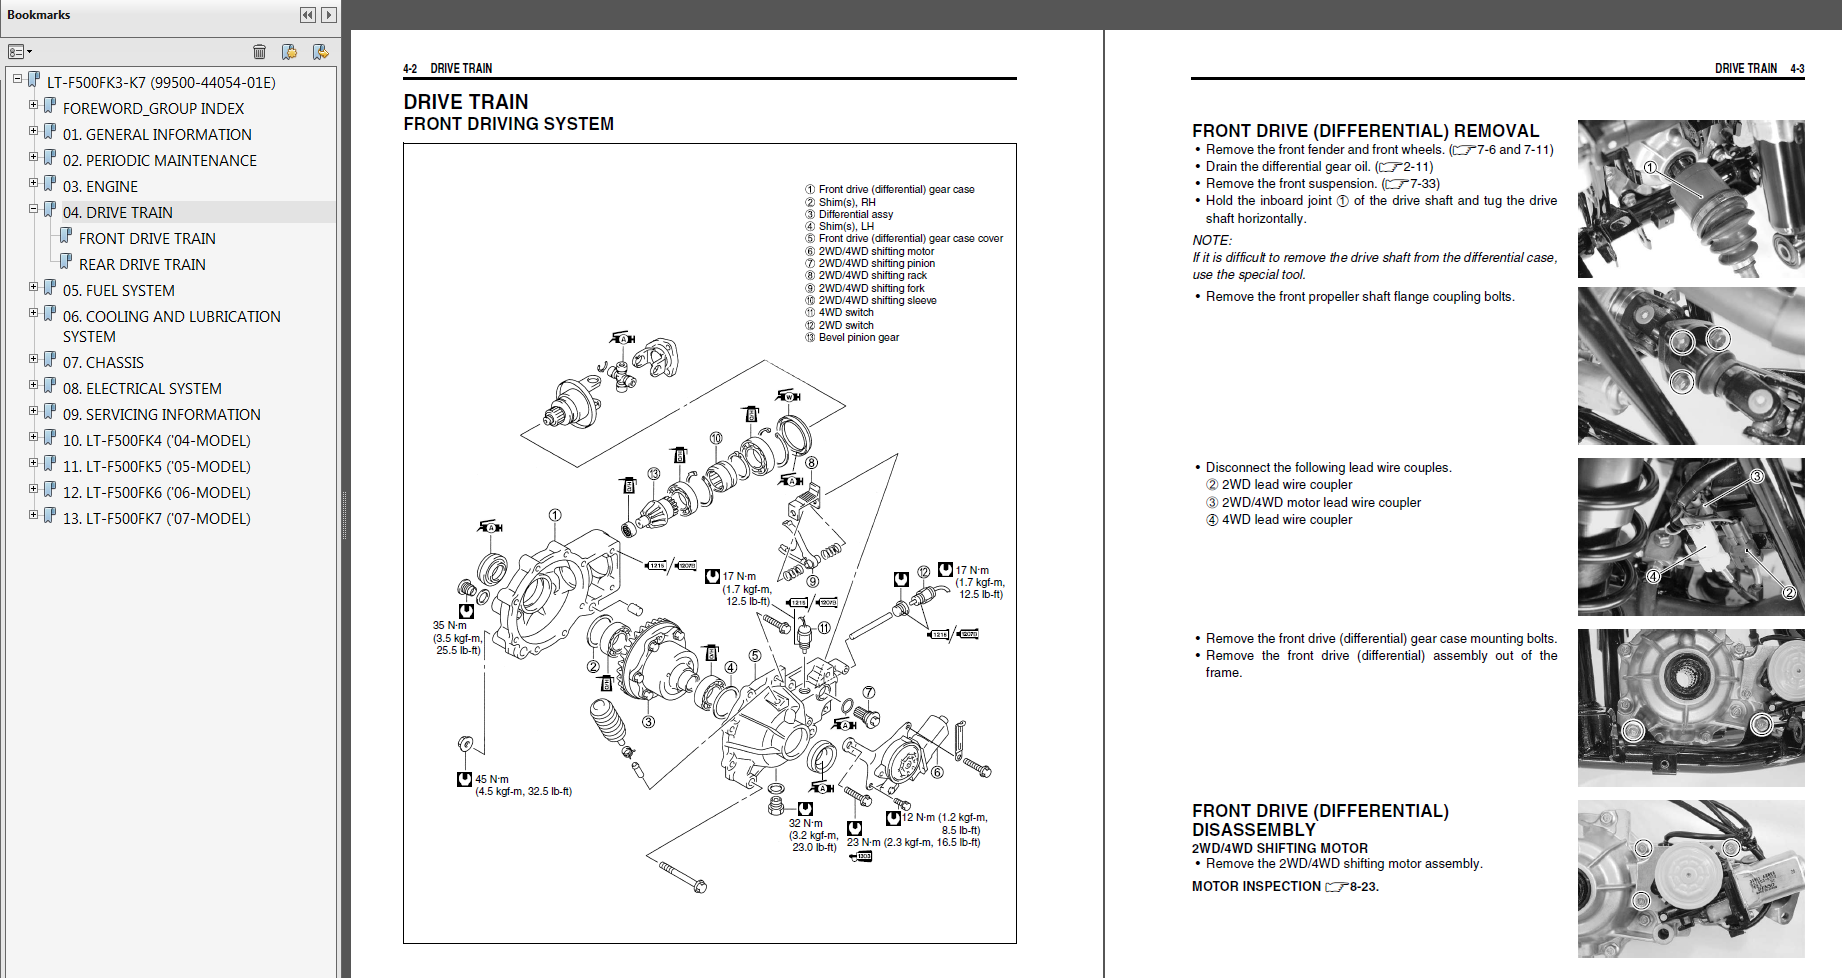 1842 x 978 png 485kB, Suzuki Vinson 500 Owners Manual | PDF Download